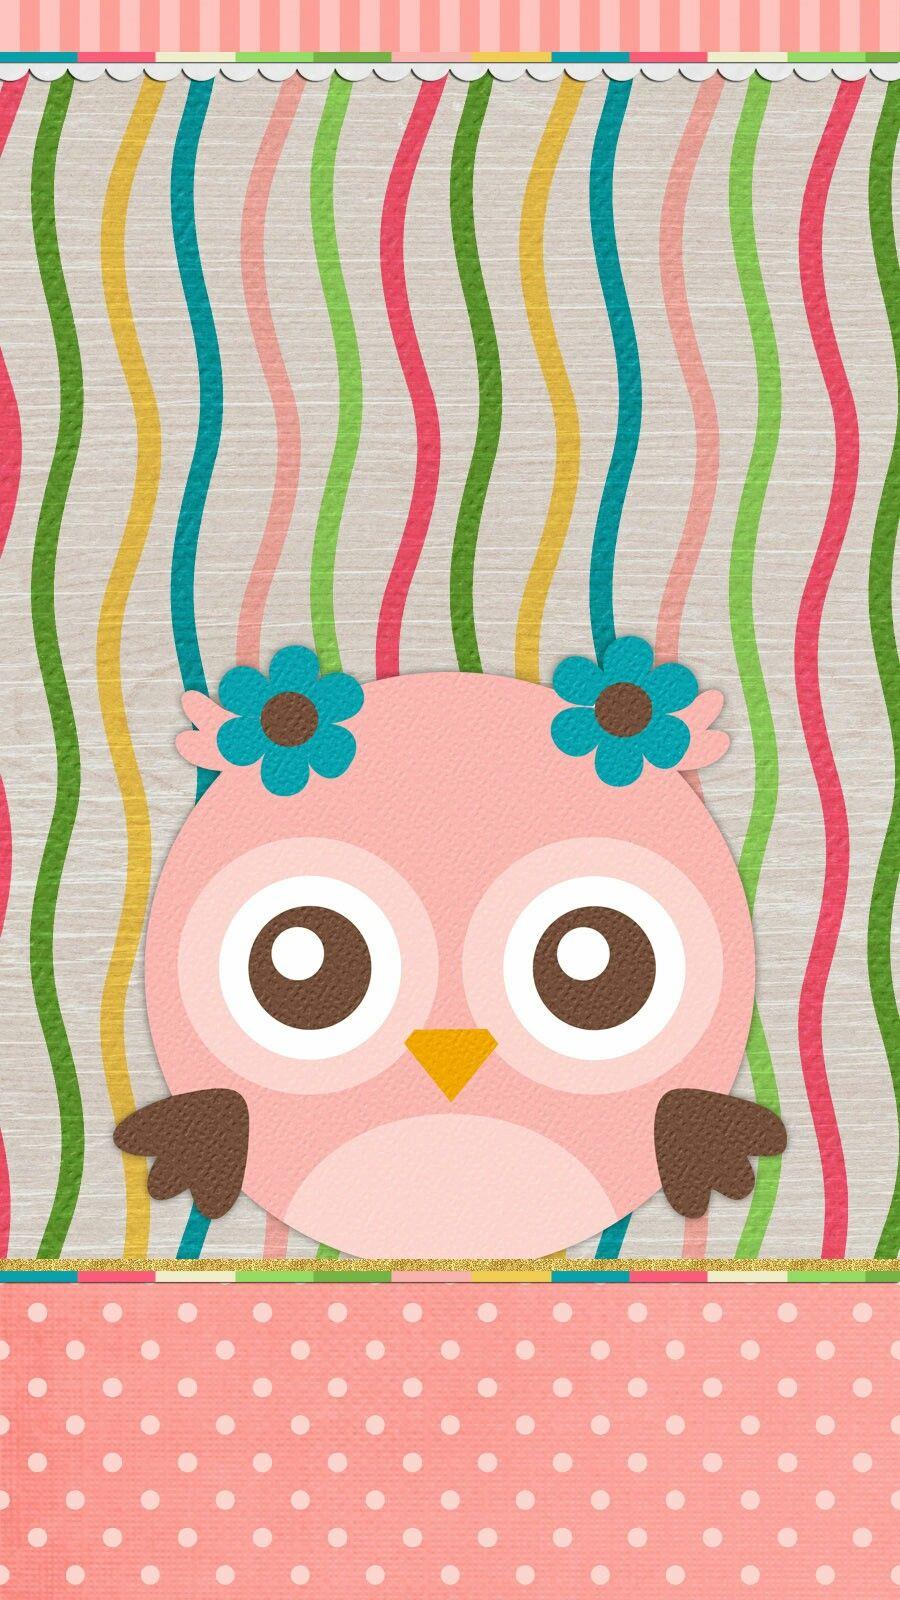 spring #owls #wallpaper #iphone. Owl wallpaper, Cute owls wallpaper, Owl wallpaper iphone